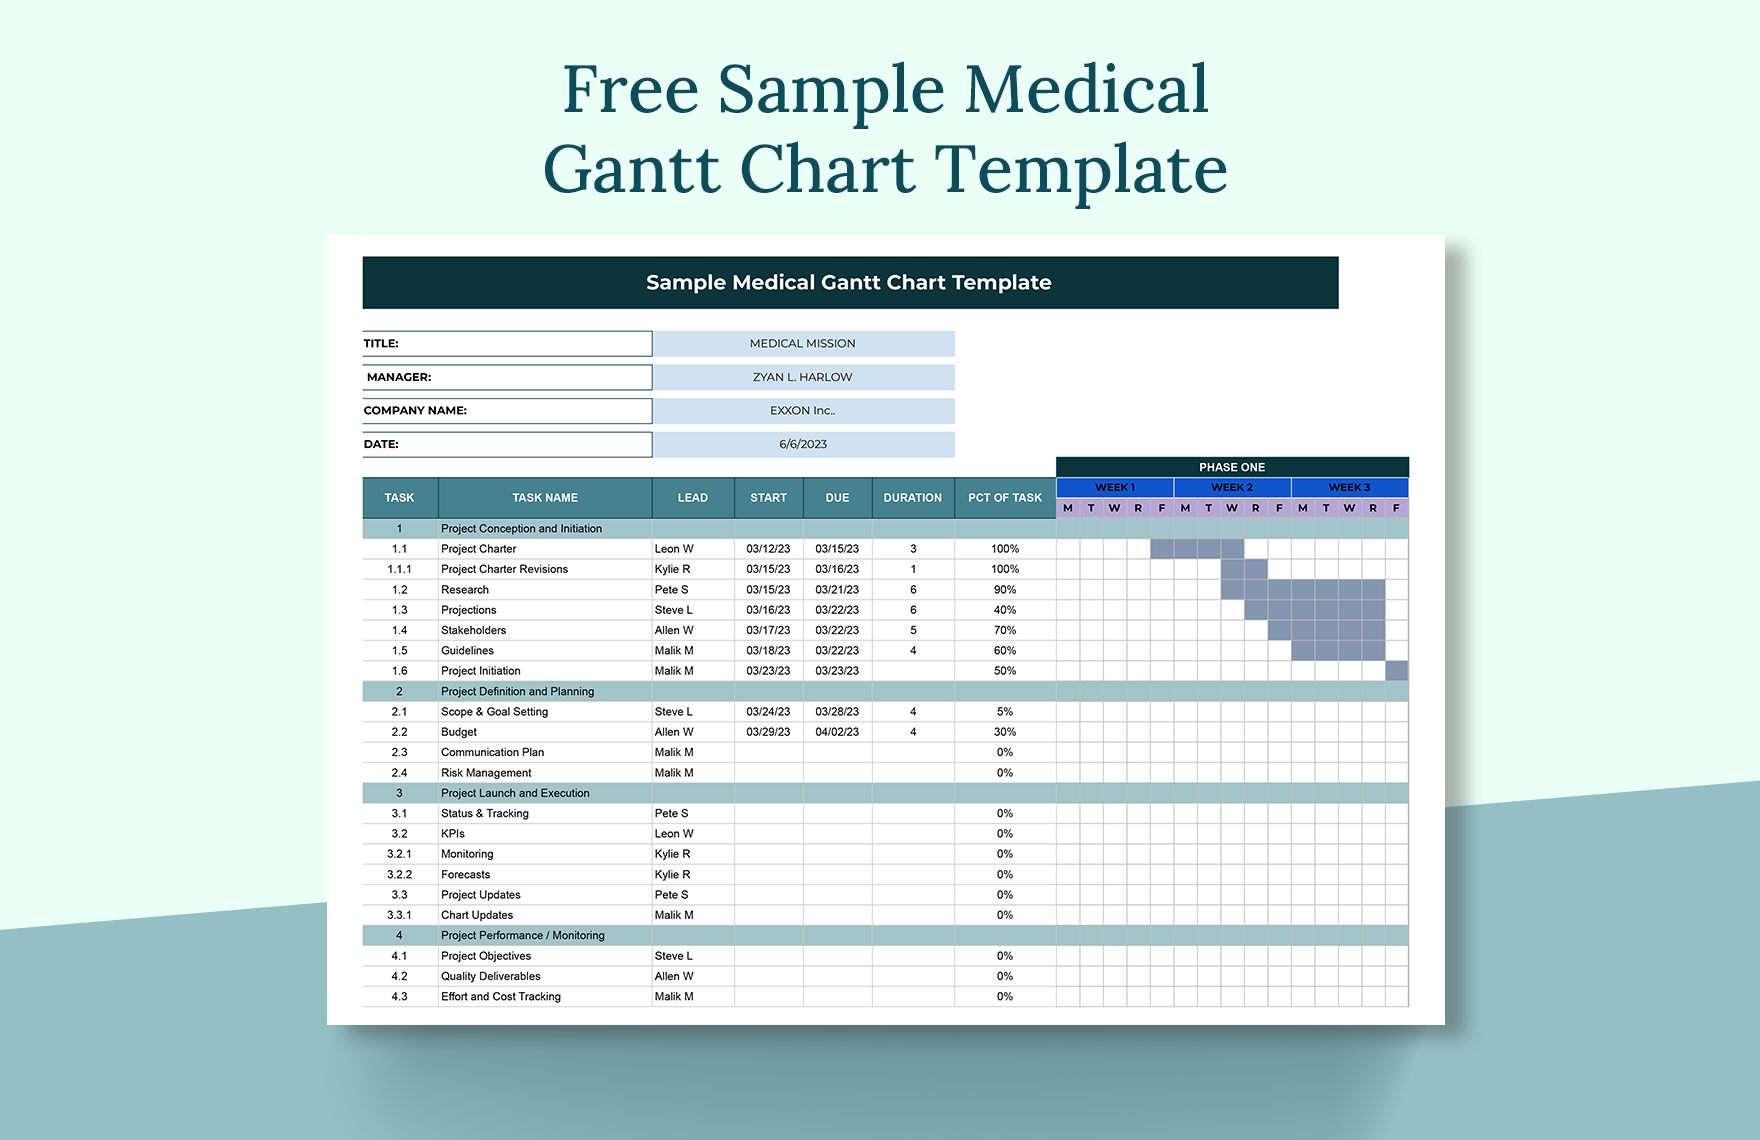 Free Sample Medical Gantt Chart Template - Google Sheets, Excel ...